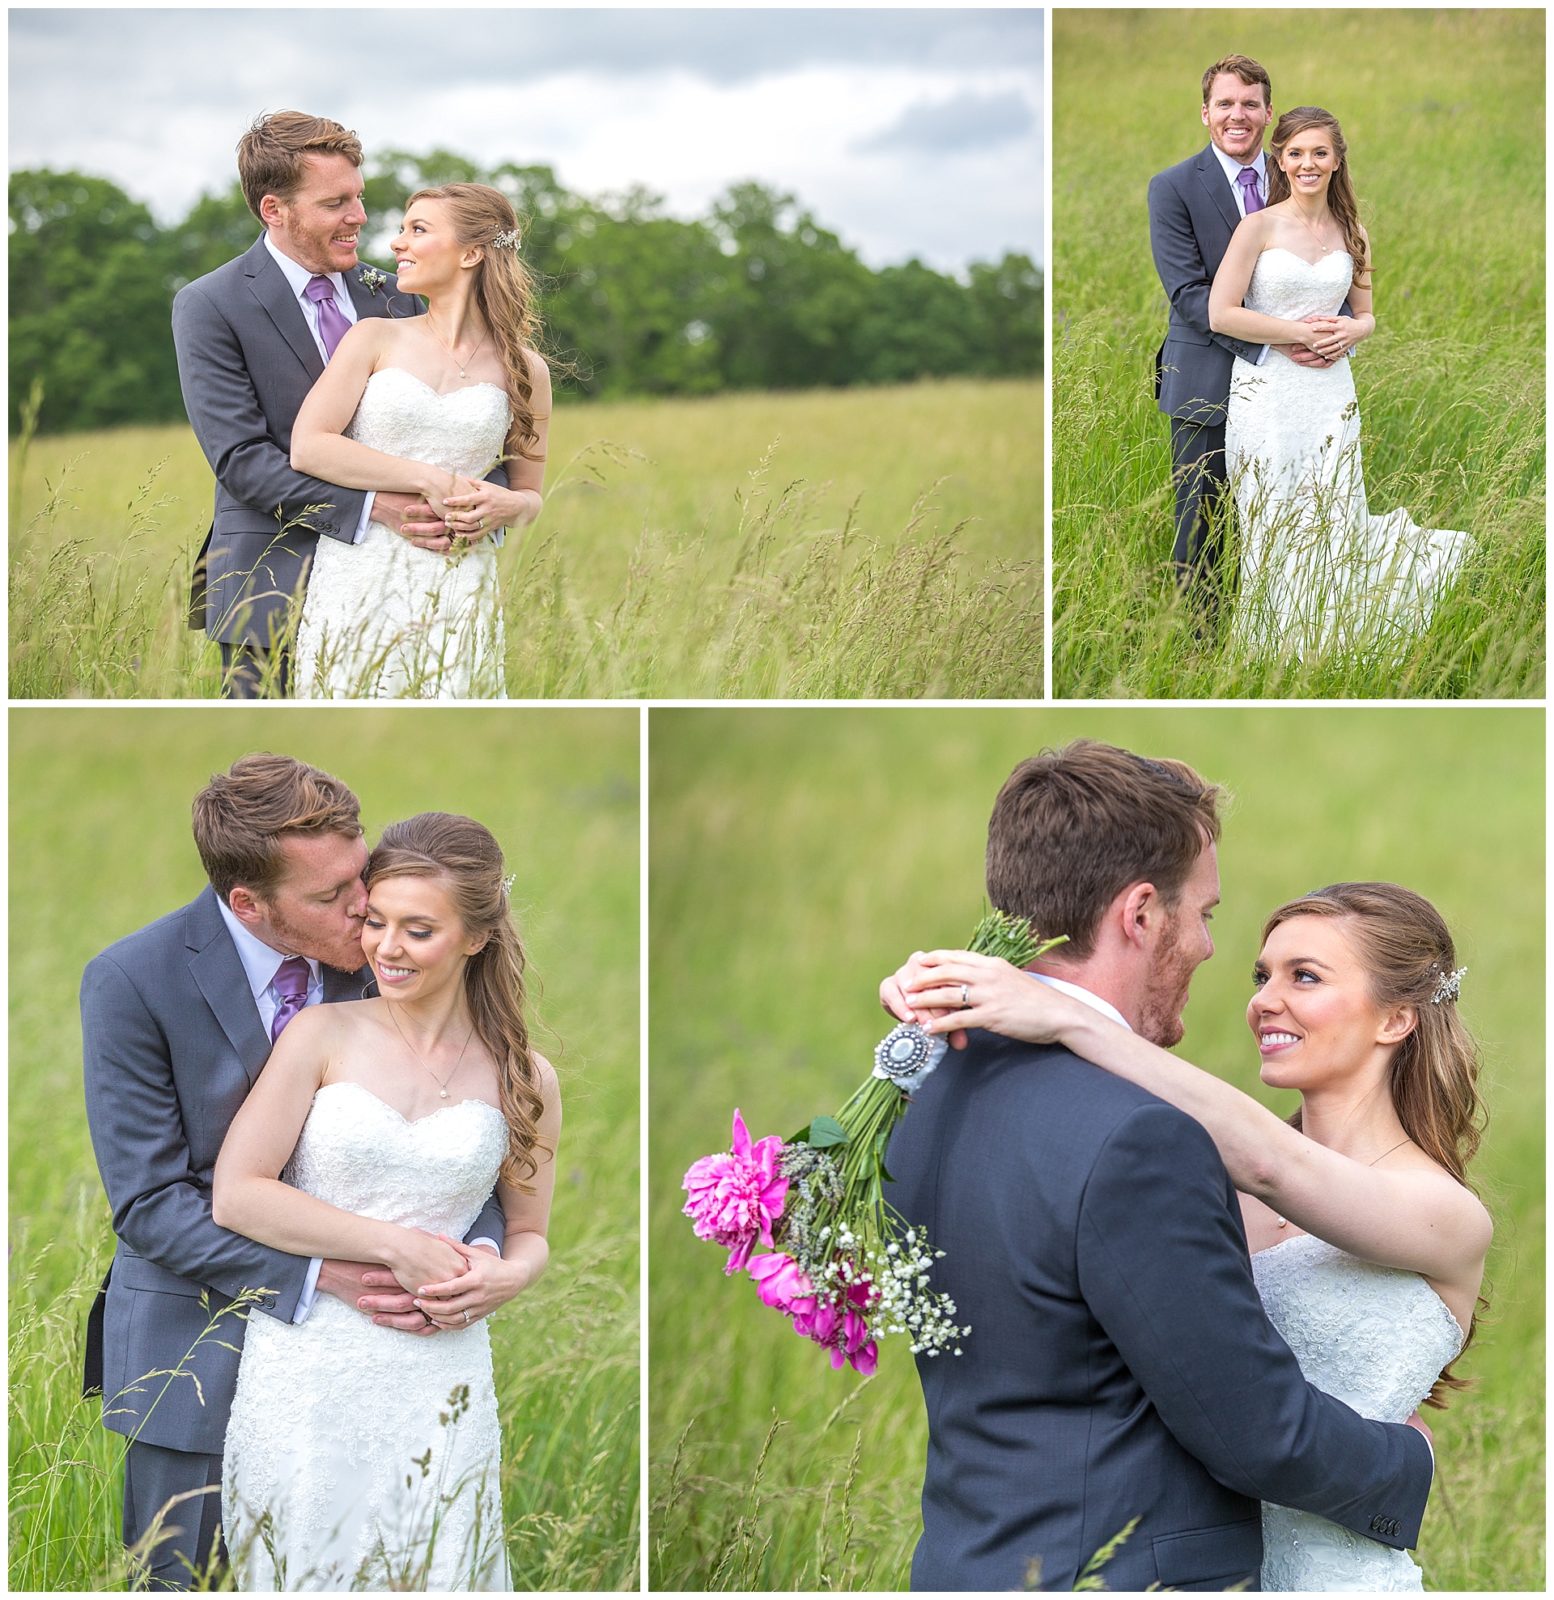 Luke & Leah's Wedding Photography Blog 16